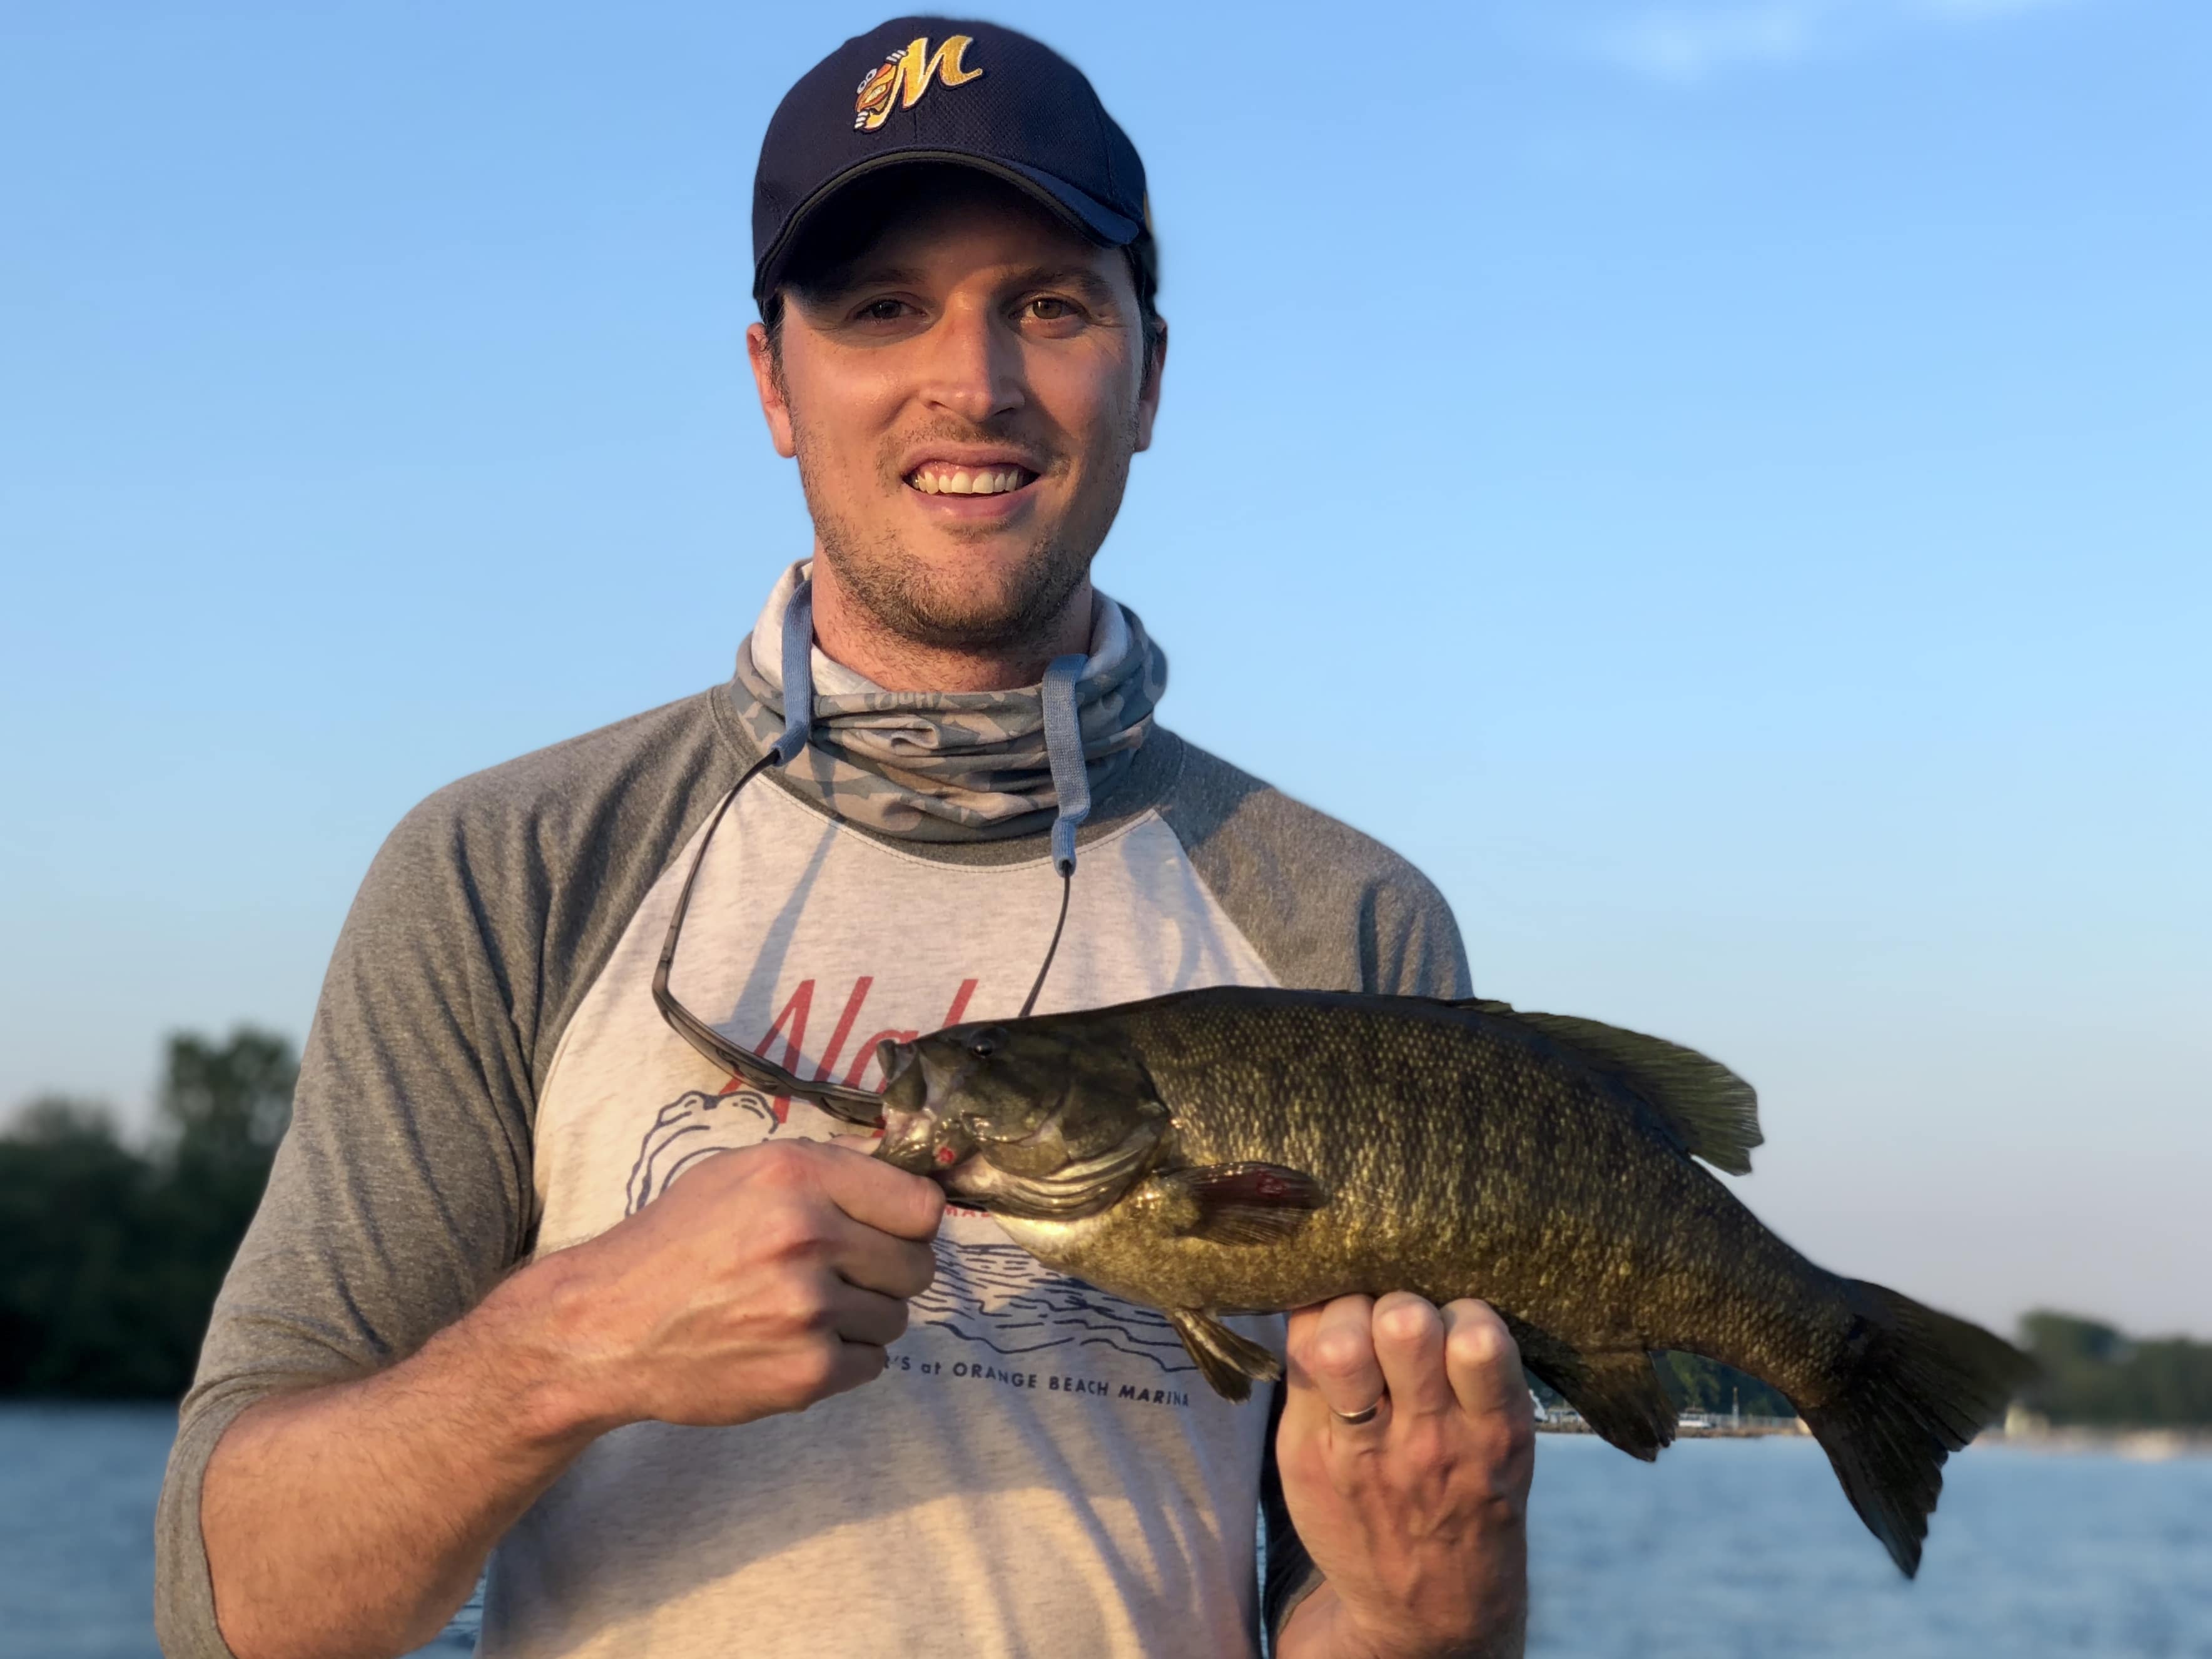 20180804 235418186 iOS - Late Summer Fishing In Buffalo Niagara